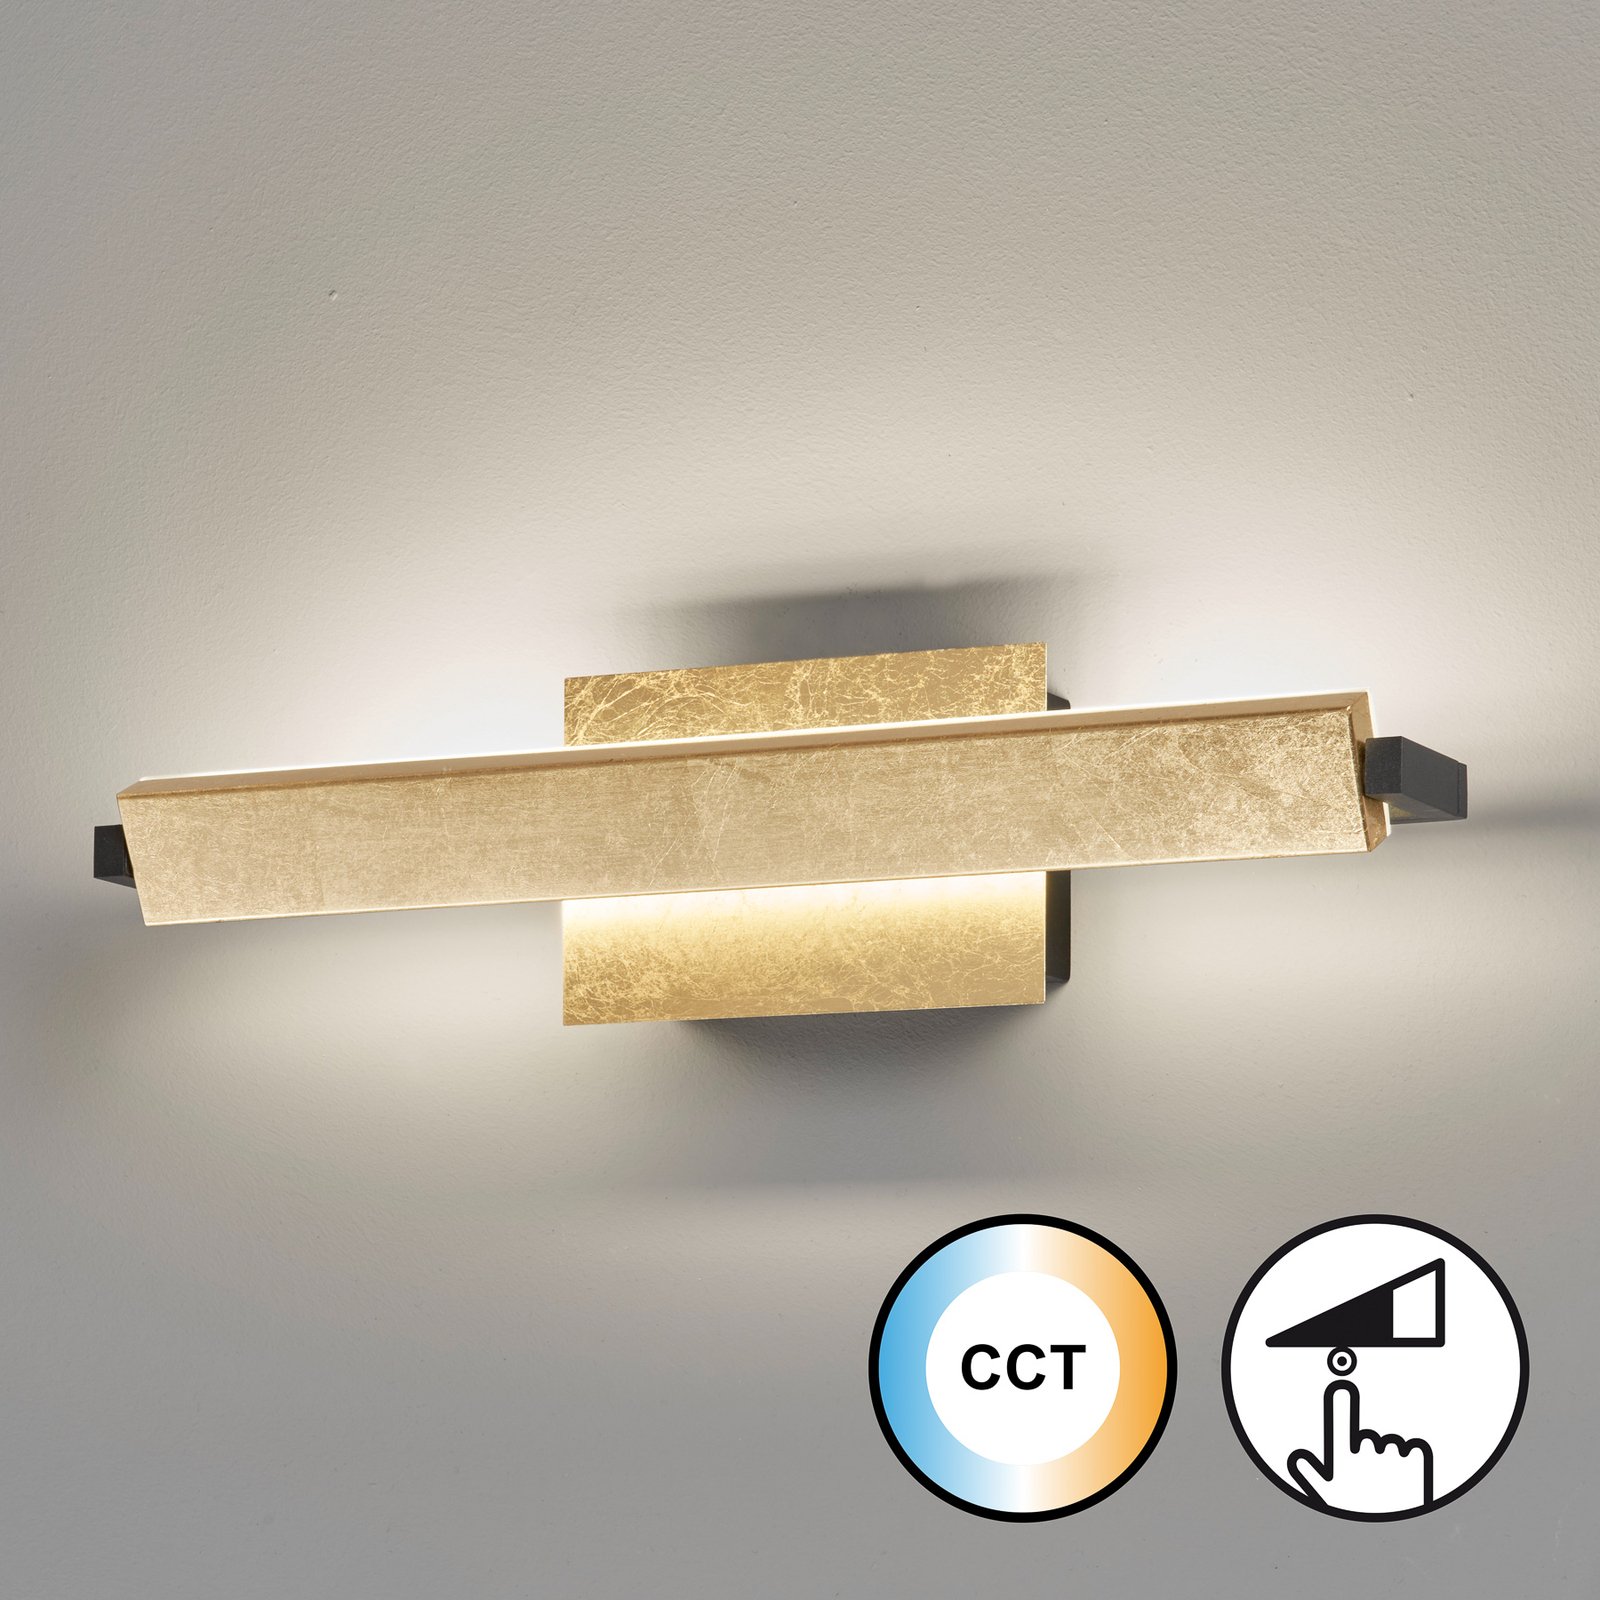 LED-Wandleuchte Pare, goldfarben, Breite 40 cm, Metall, CCT